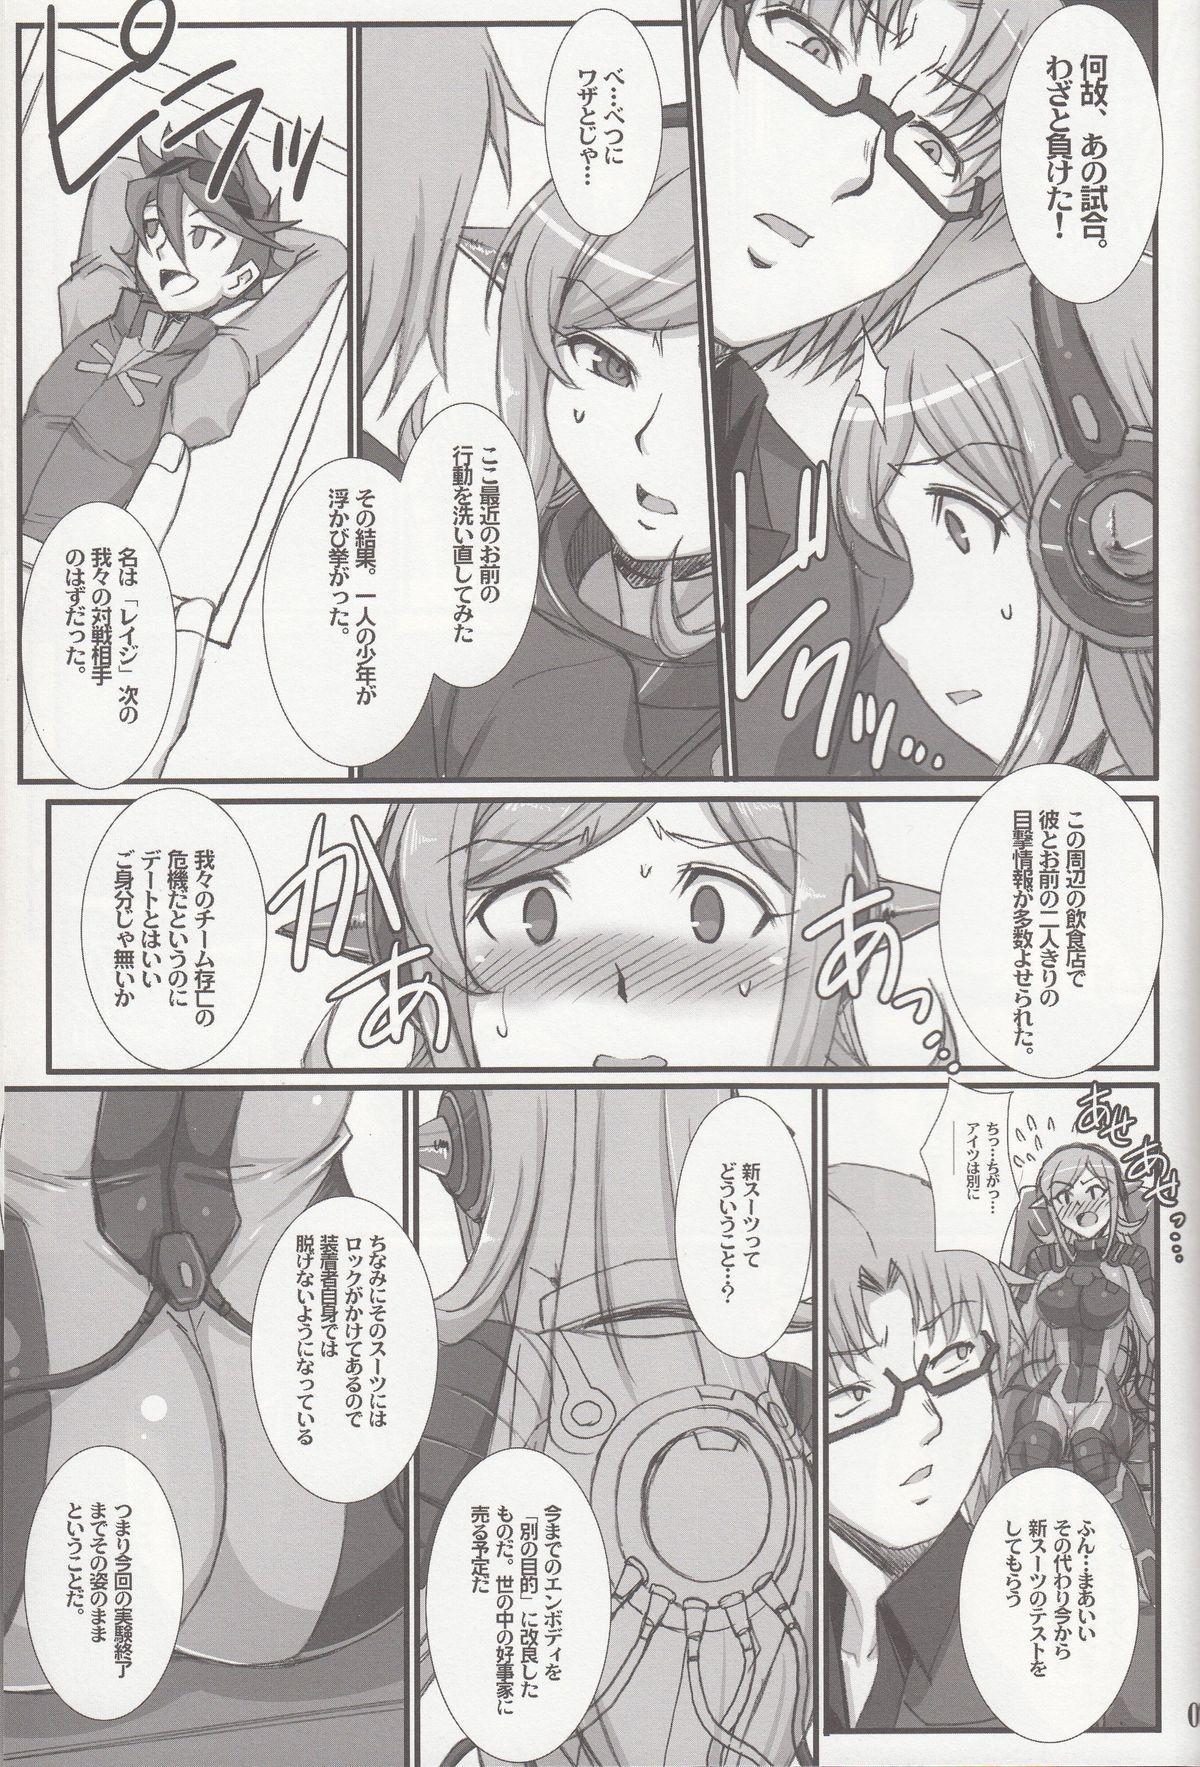 Cameltoe Inexhaustible pleasure - Gundam build fighters Delicia - Page 6